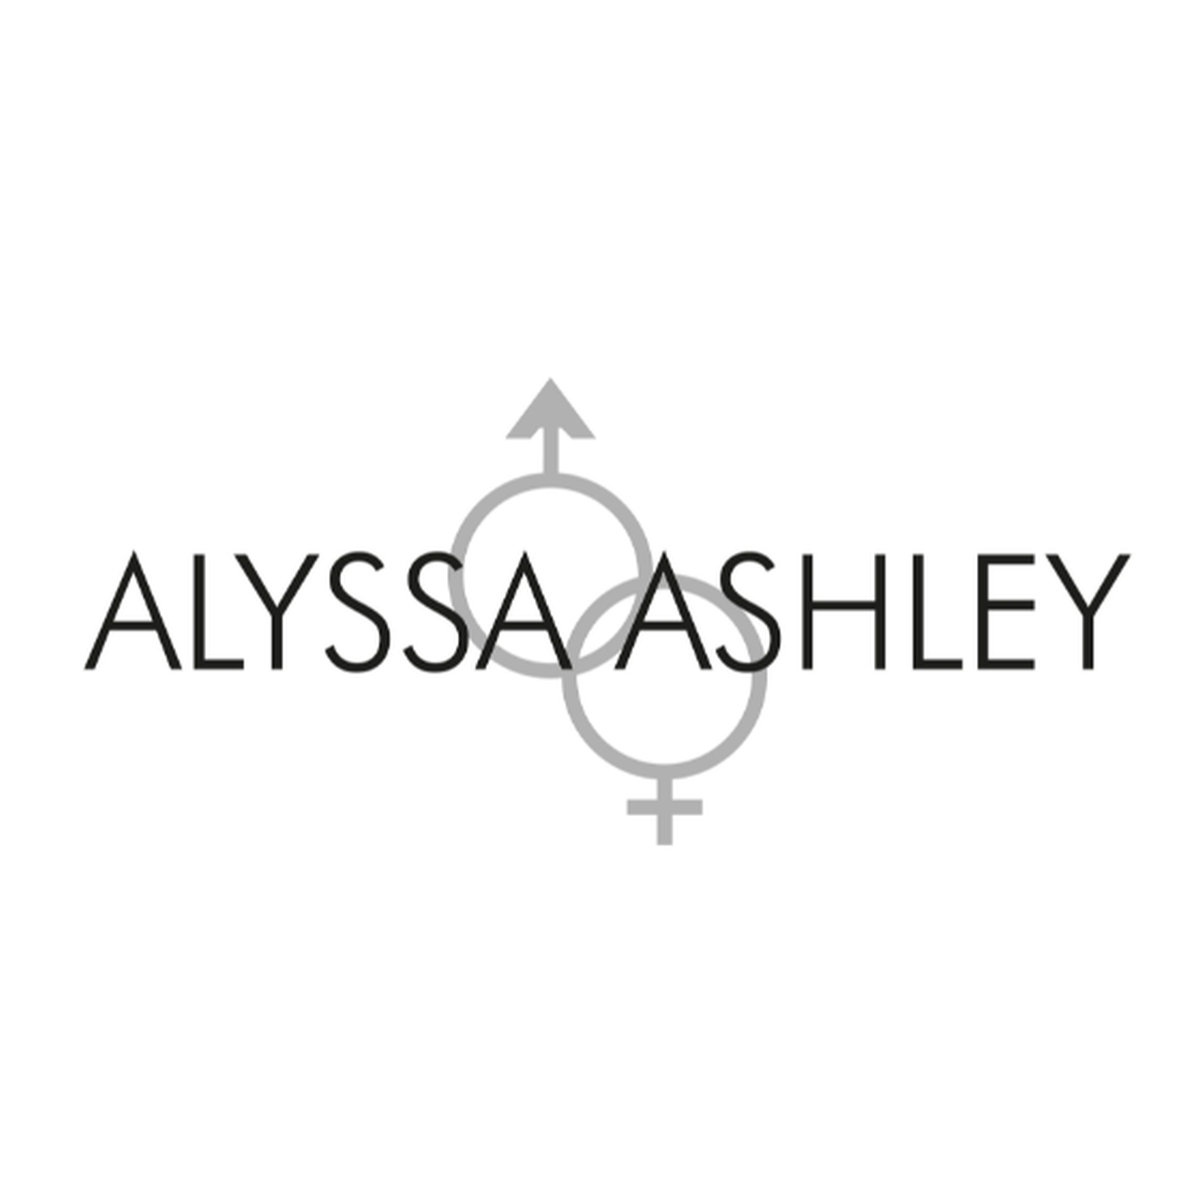 Alyssa  ashley